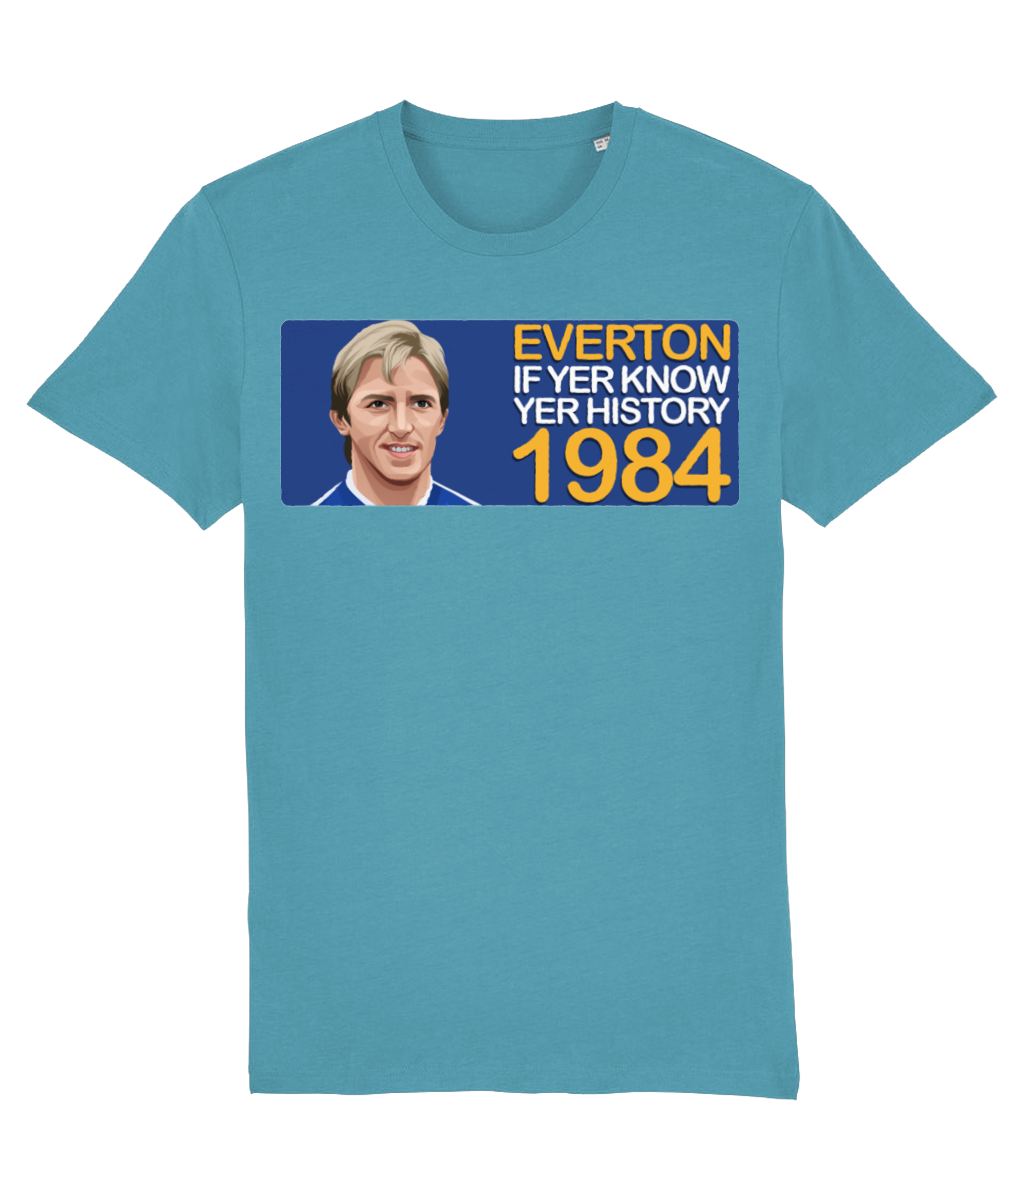 Everton 1984 Gary Stevens If Yer Know Yer History Unisex T-Shirt Stanley/Stella Retrotext Atlantic Blue XX-Small 